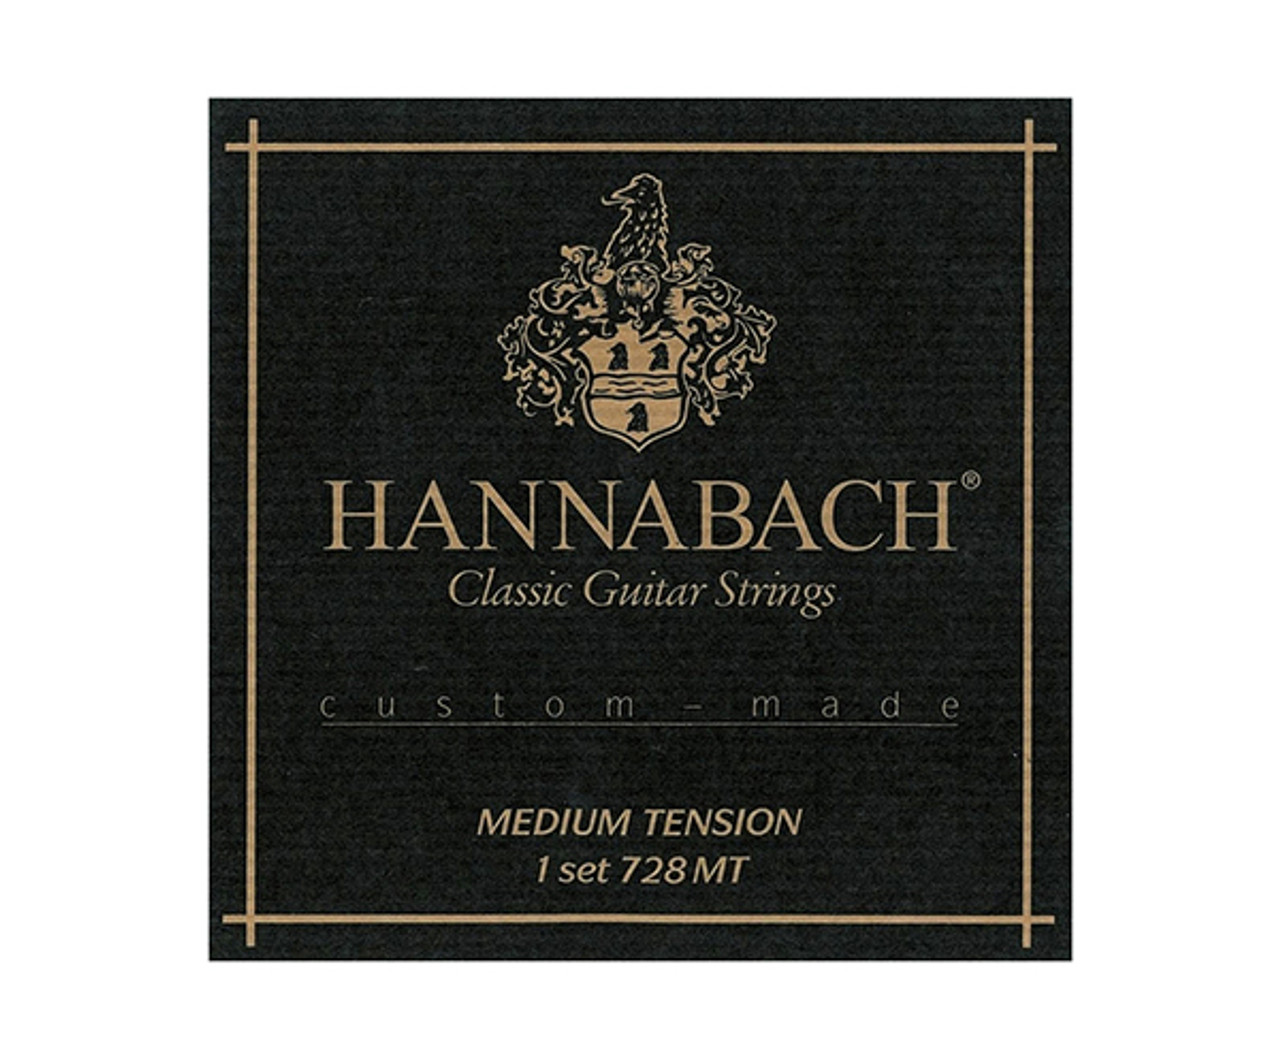 Hannabach Classic Set-Custom Made 728 MT